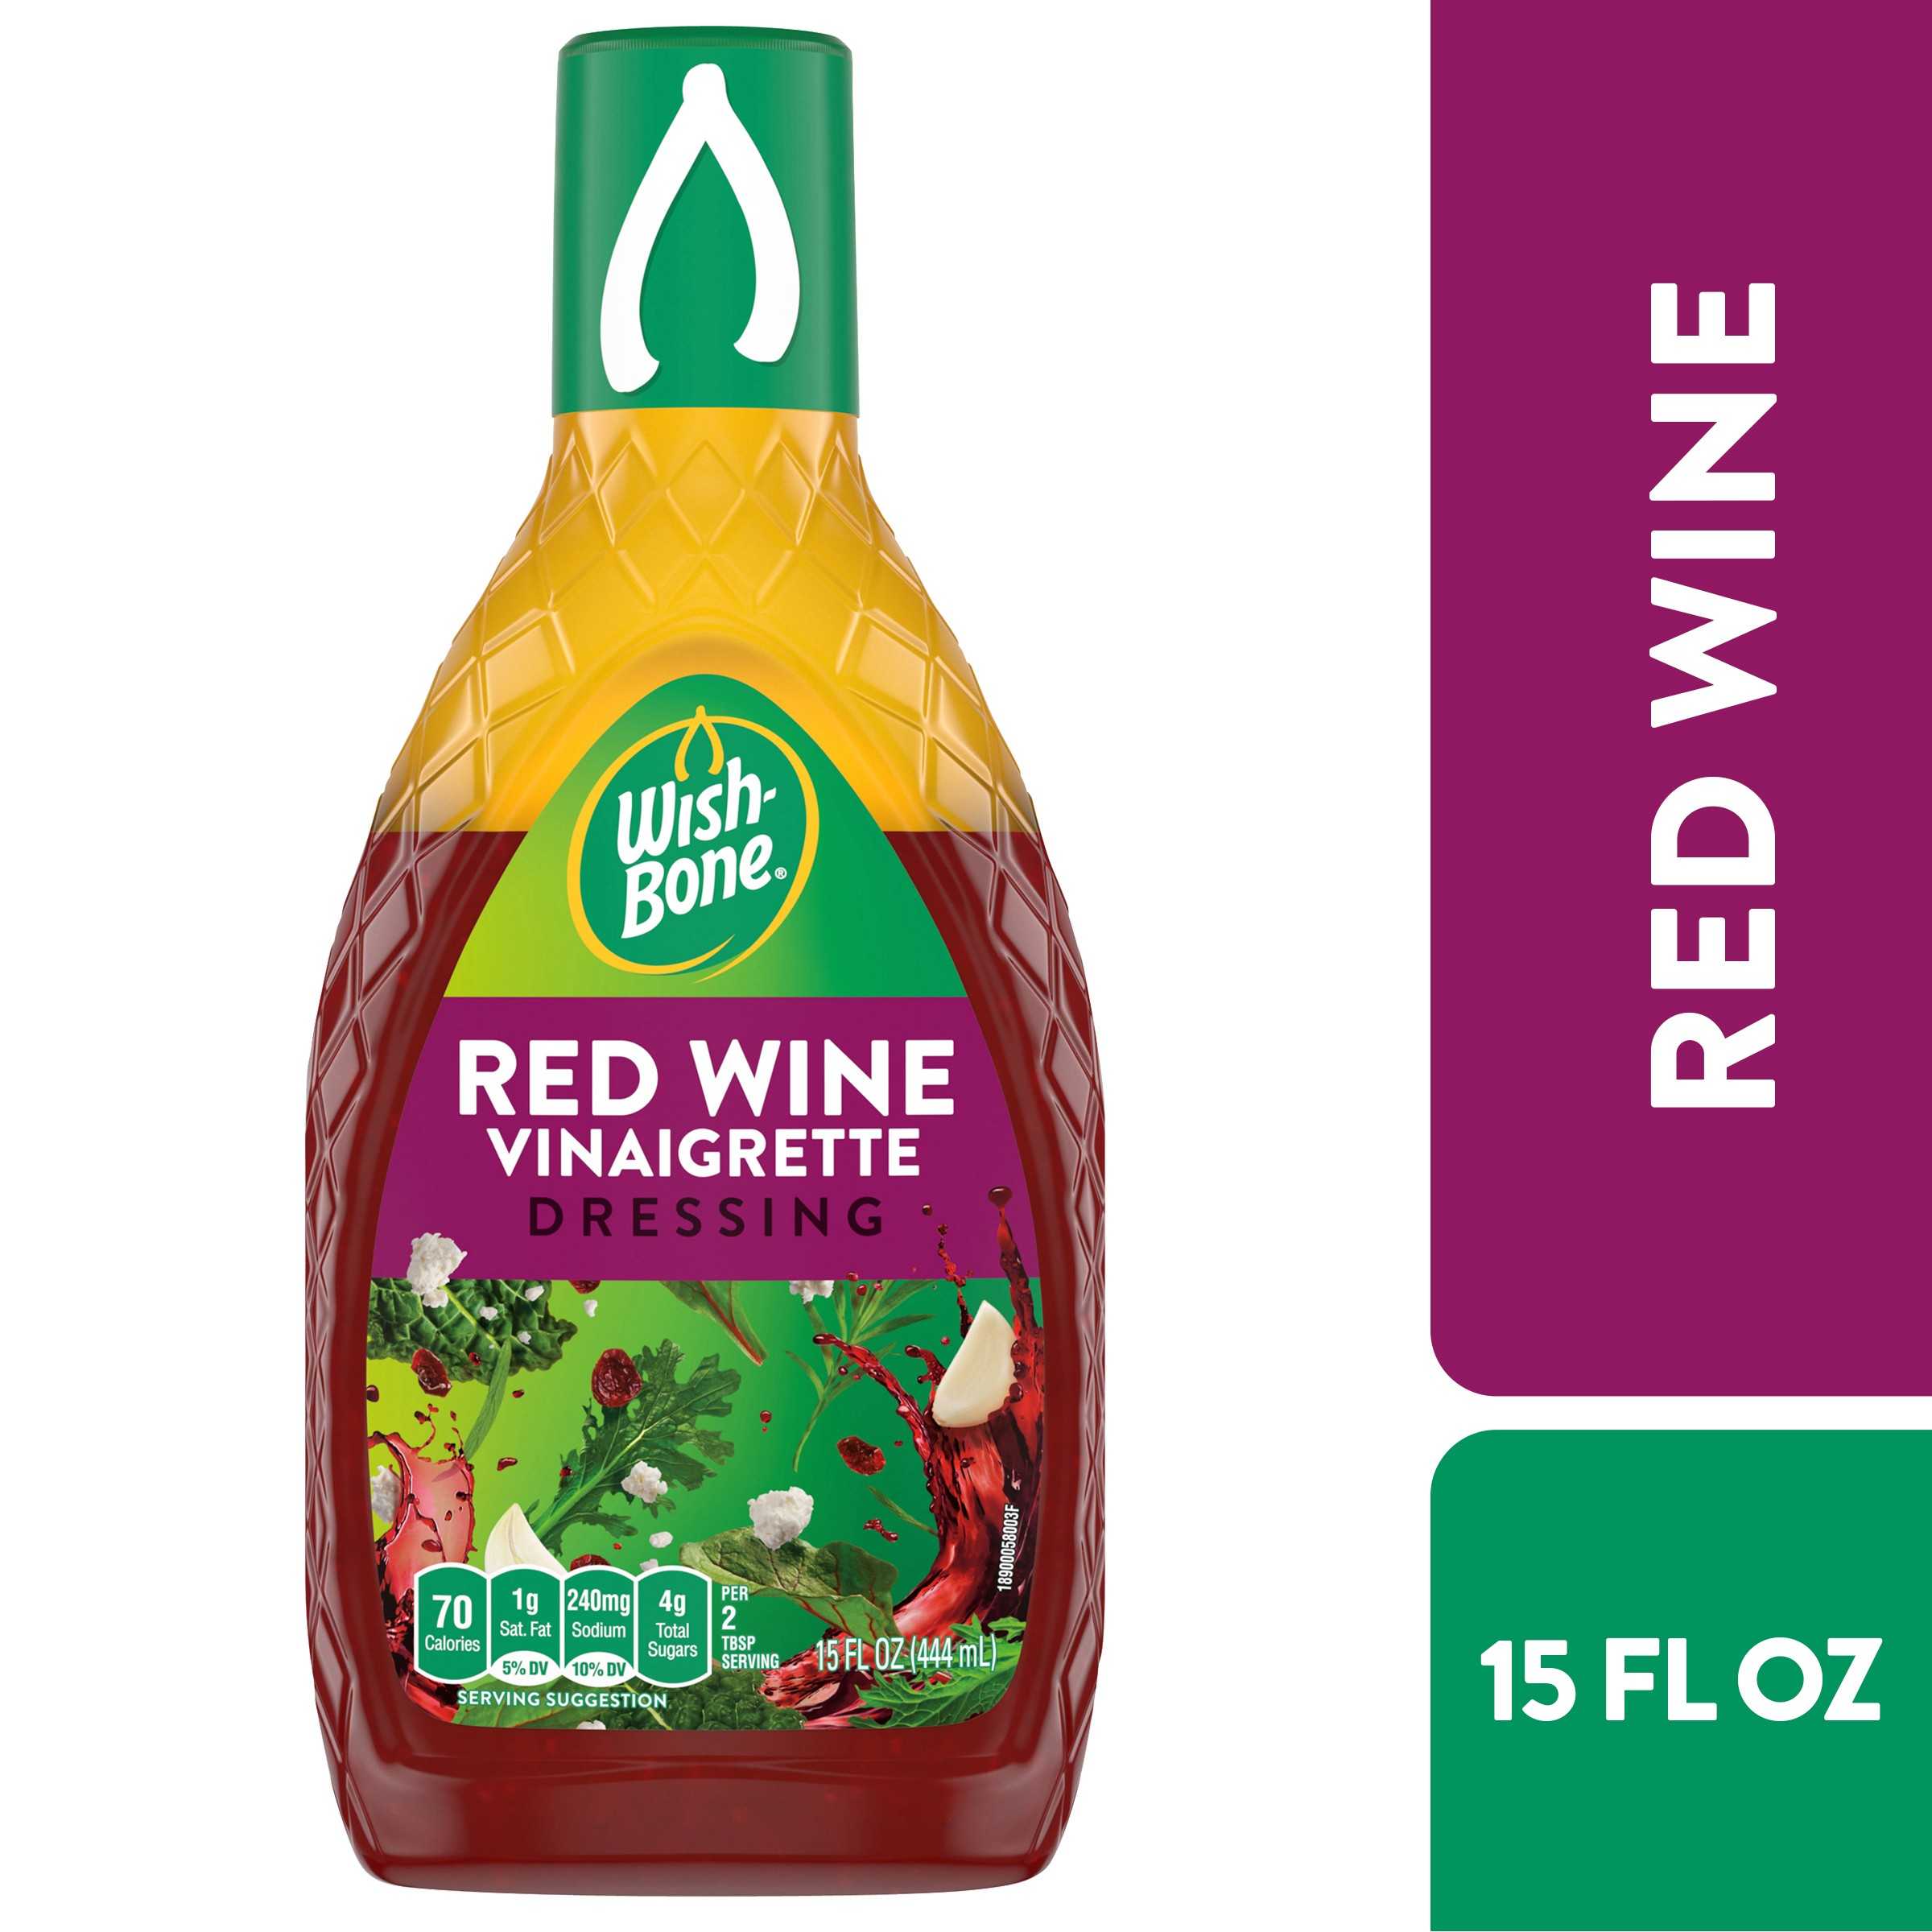 Wish-Bone Red Wine Vinaigrette Dressing 15 FL OZ